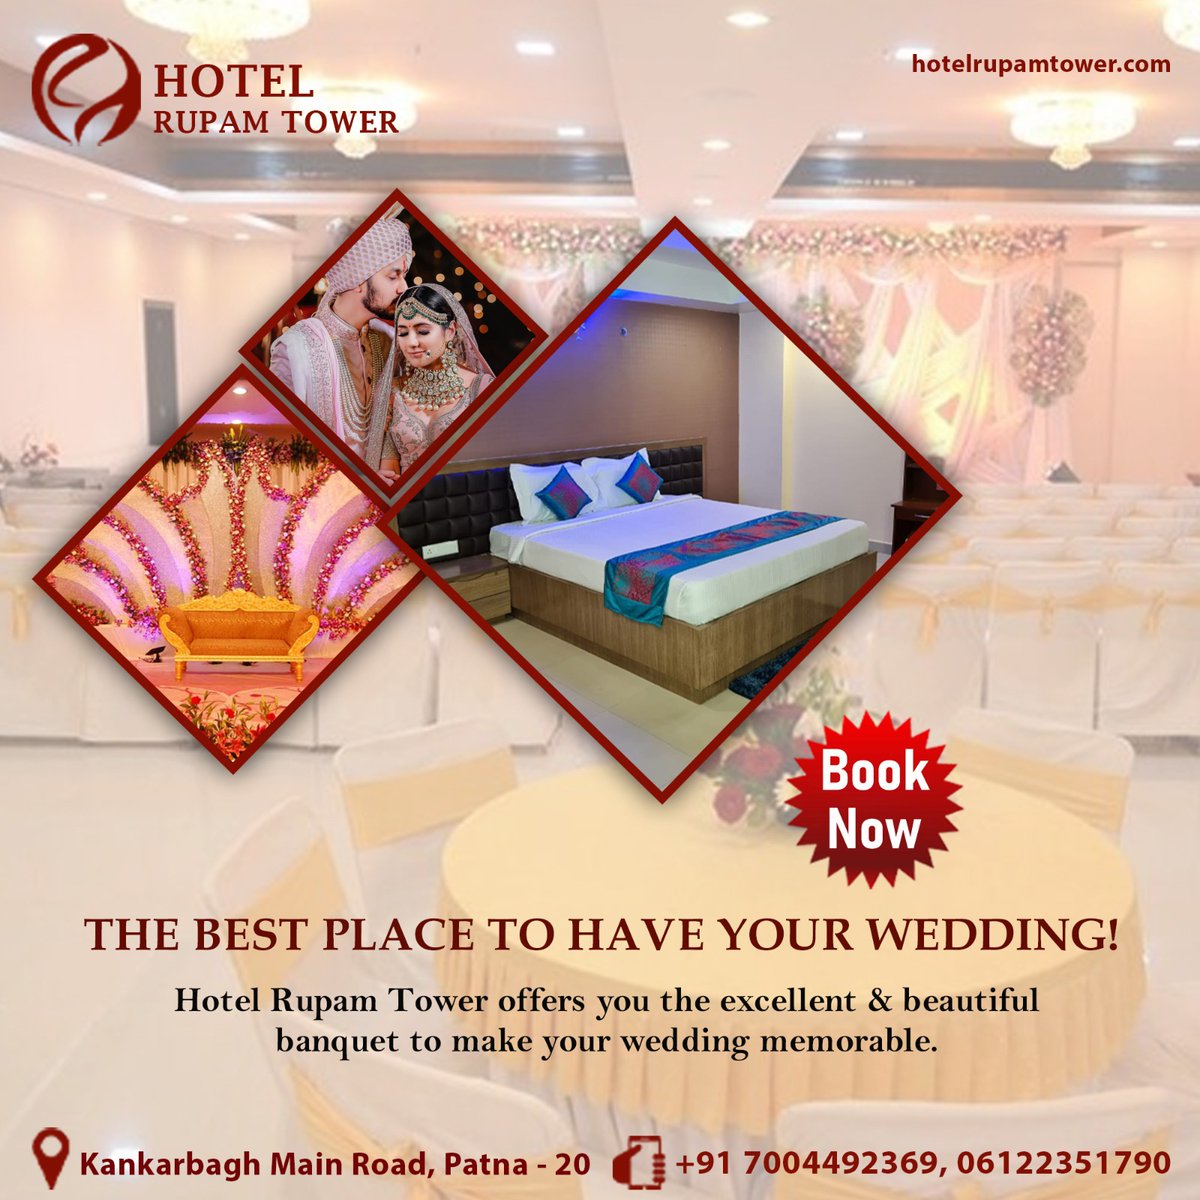 𝗠𝗮𝗸𝗲 𝗬𝗼𝘂𝗿 𝗪𝗲𝗱𝗱𝗶𝗻𝗴 𝗦𝗽𝗲𝗰𝘁𝗮𝗰𝘂𝗹𝗮𝗿 𝗮𝘁 𝗢𝘂𝗿 𝗕𝗮𝗻𝗾𝘂𝗲𝘁 𝗛𝗮𝗹𝗹
Contact us:- +91 7004492369,06122351790
Visit us hotelrupamtower.com
#celebrationtime #Banquet #weddinghall #hotel #PerfectDestination #hotelrupamtower #BestHotelInPatna #Patna #Bihar